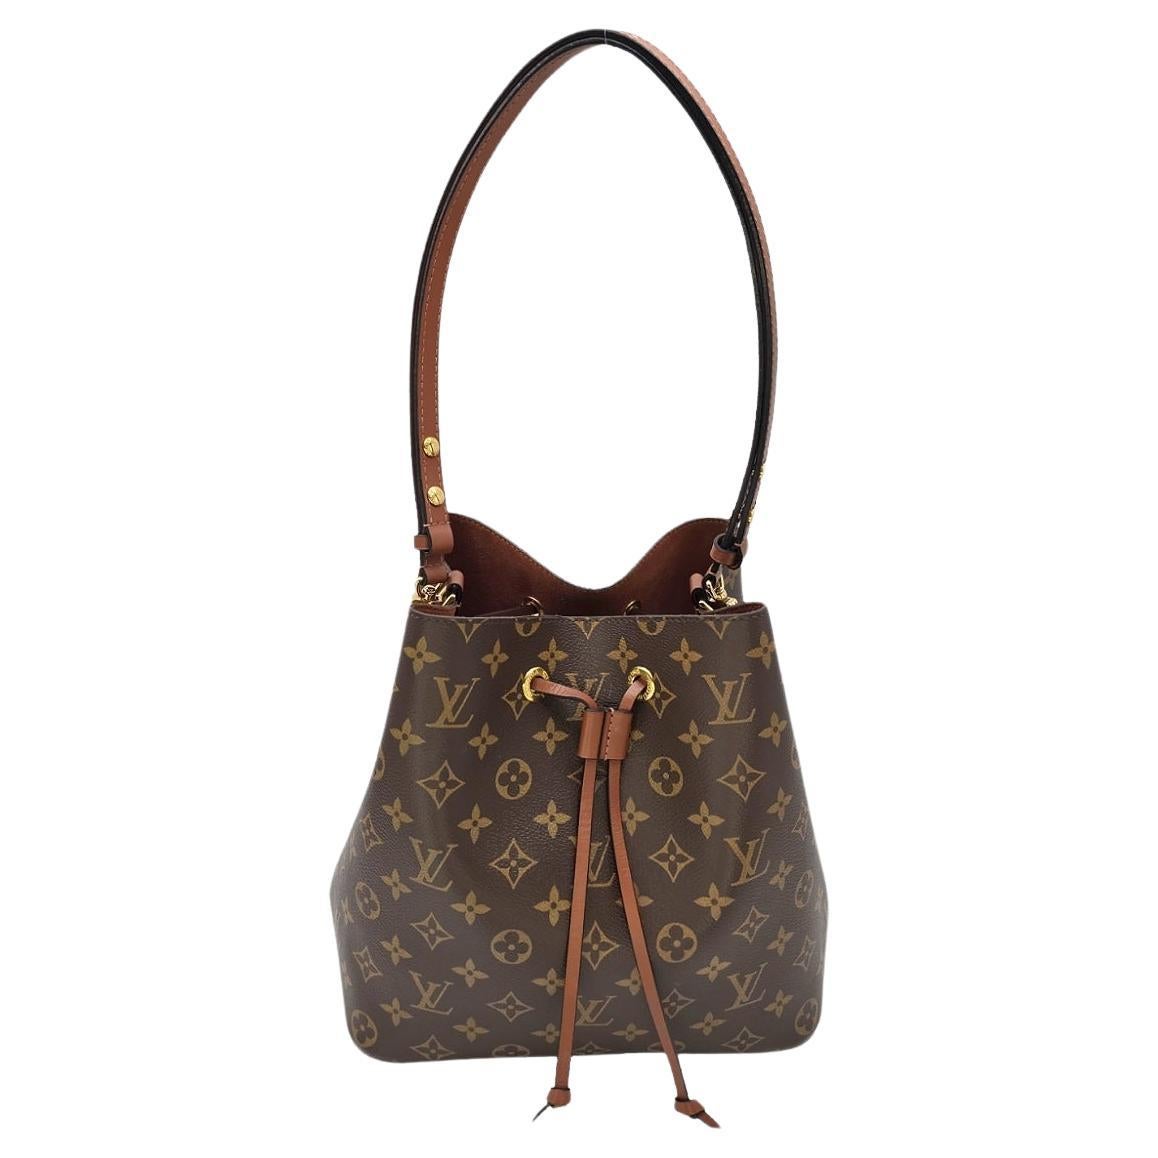 How do I store Louis Vuitton handbags?